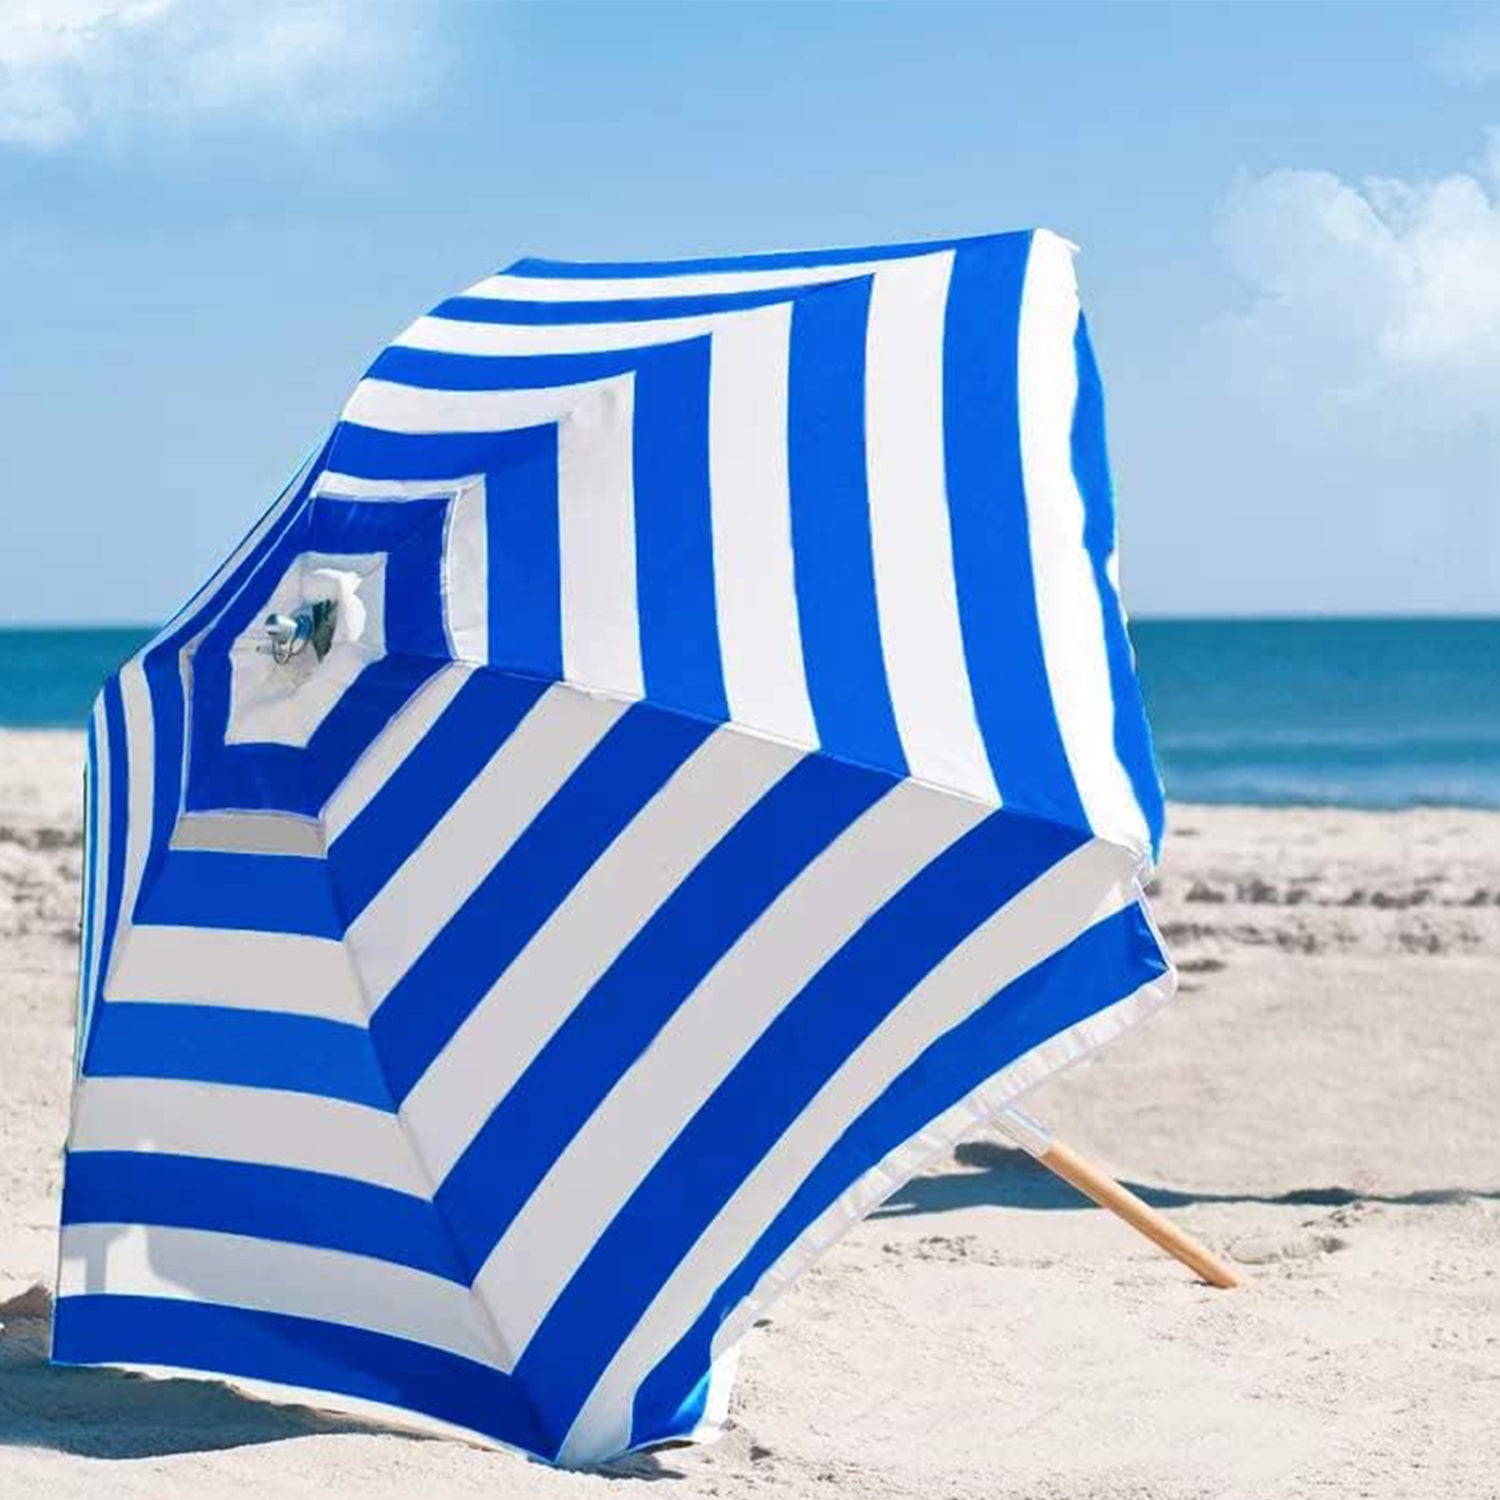 AMMSUN 7.5ft Commercial Grade  Beach Umbrella Blue Strips